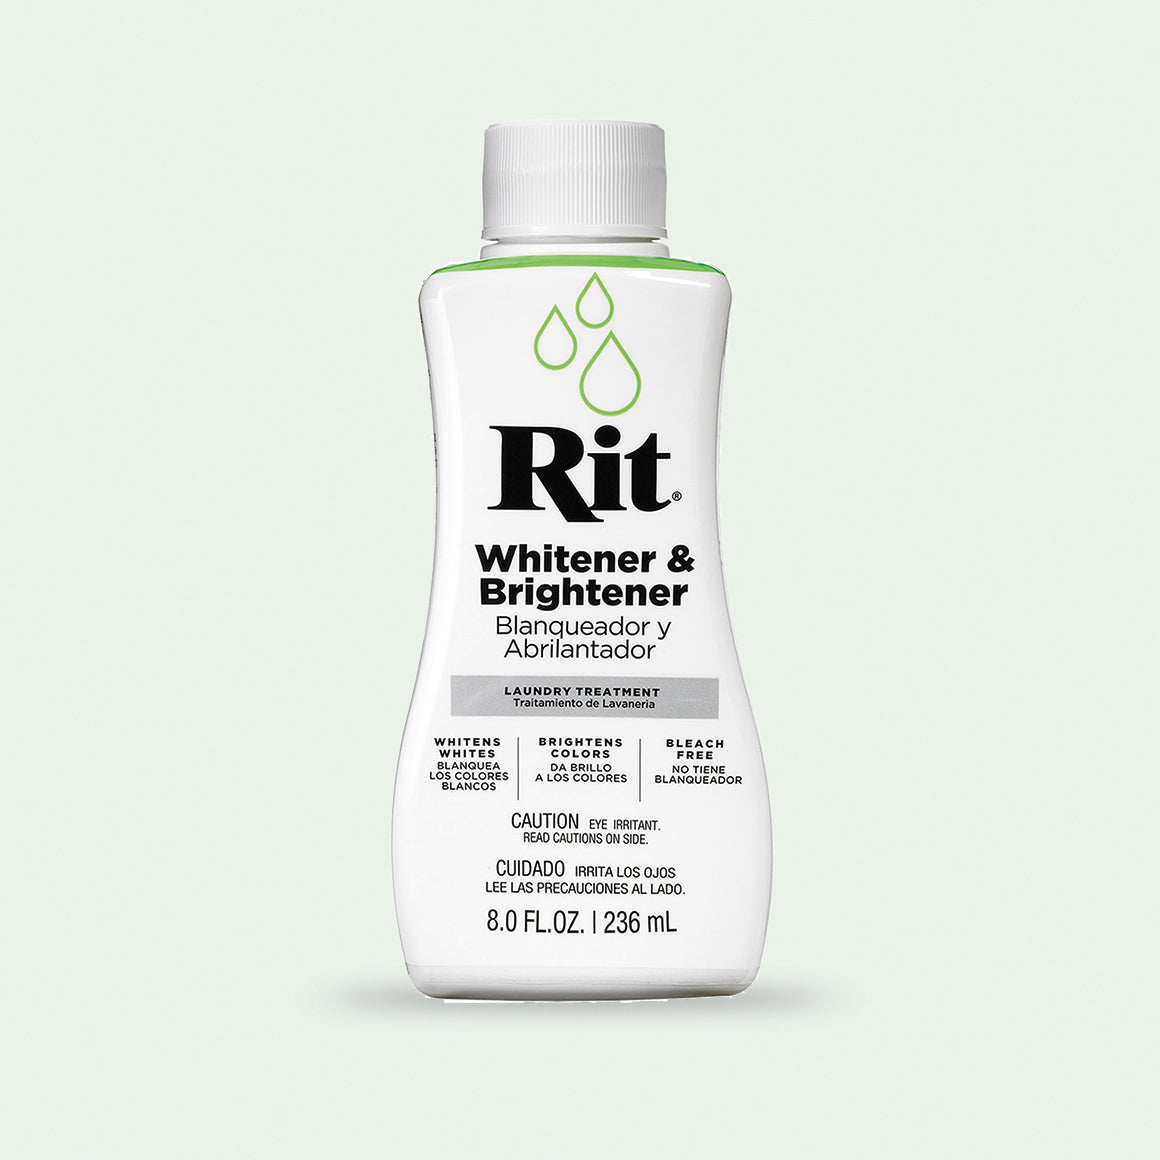 Rit White-Wash Laundry Treatment, 1-7/8 oz